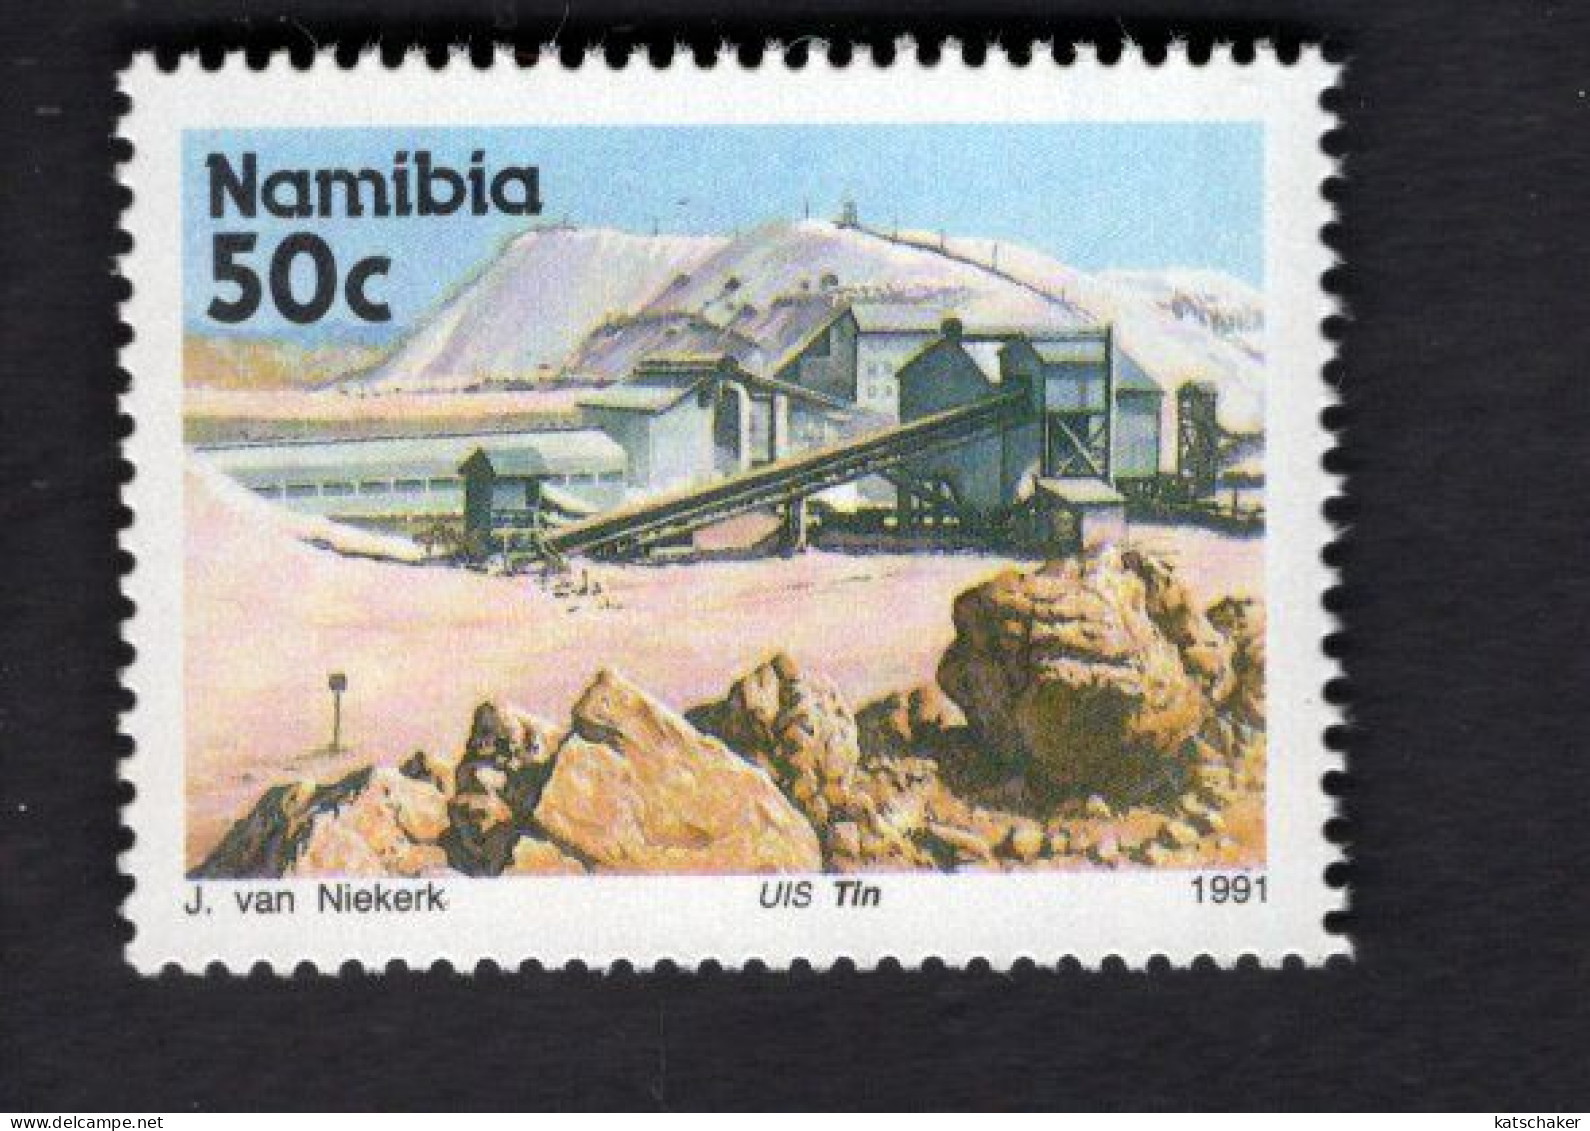 2025400223 1991 SCOTT 685 (XX) POSTFRIS MINT NEVER HINGED - MINERALS & MINES - UIS MINE - Namibie (1990- ...)